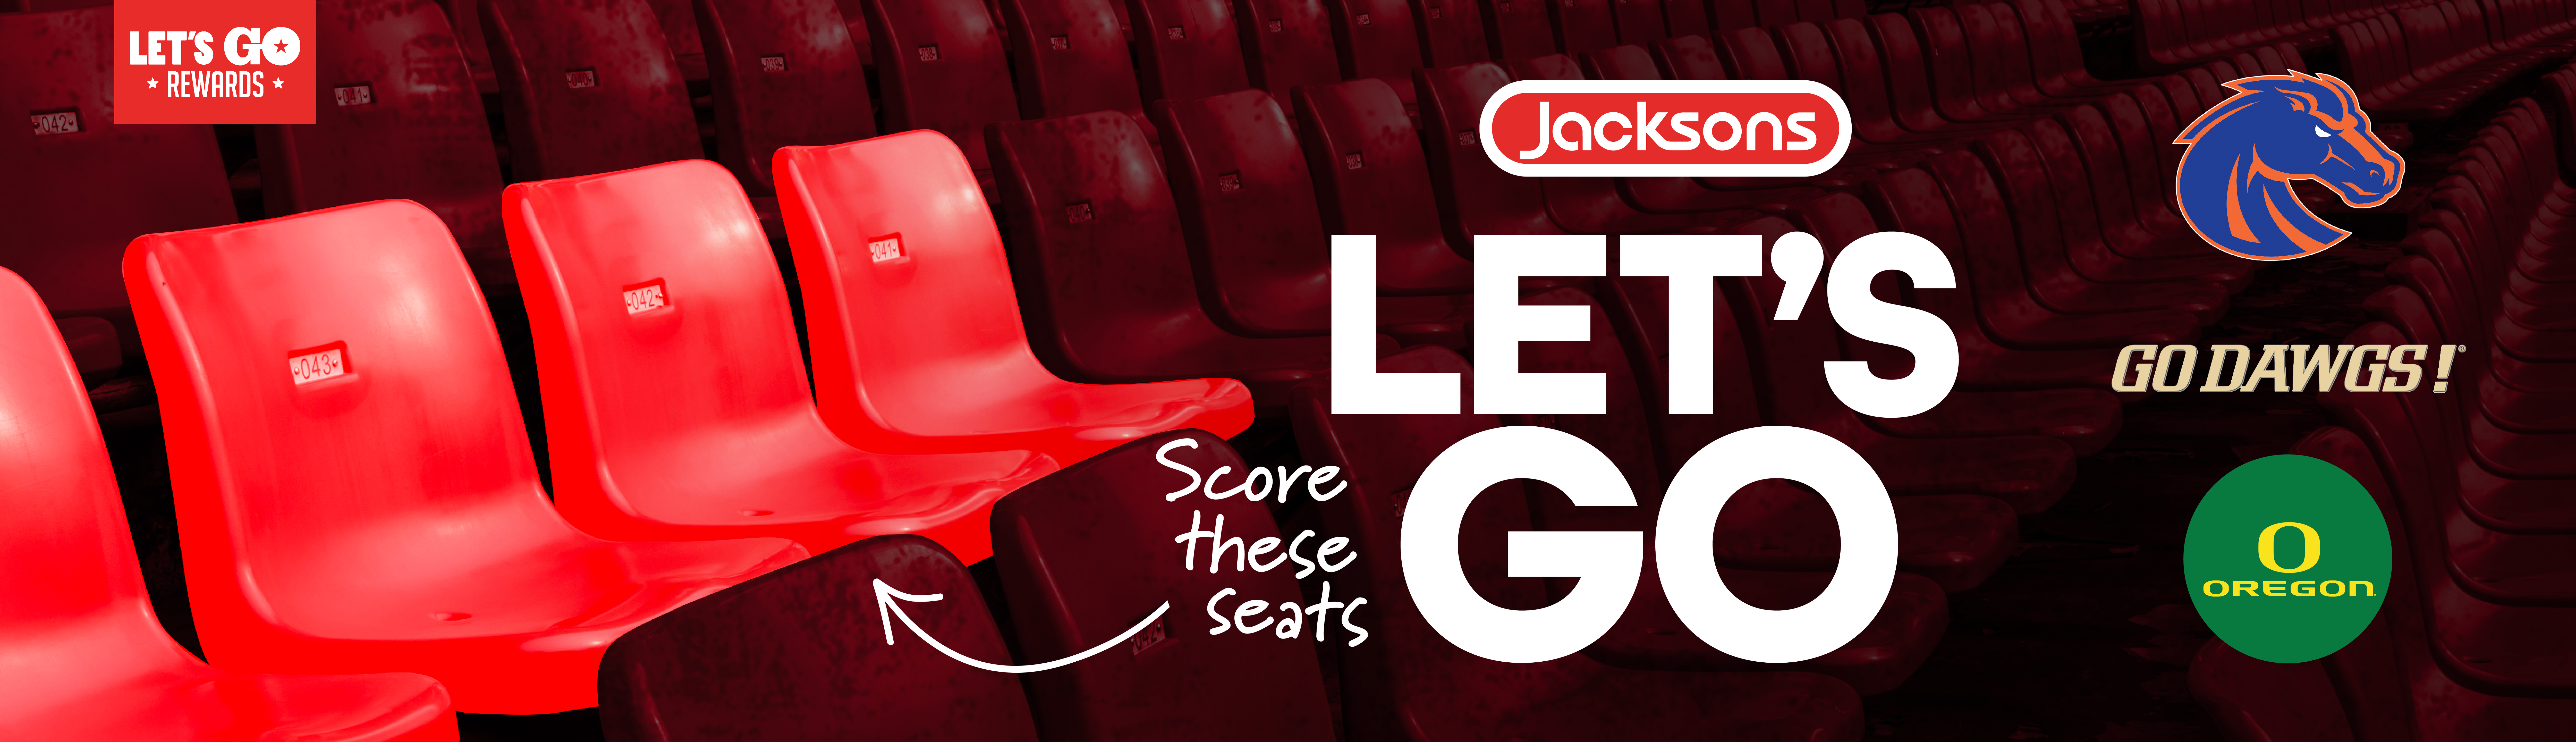 Jacksons Let's Go Rewards - Football Ticket Sweepstakes 2023